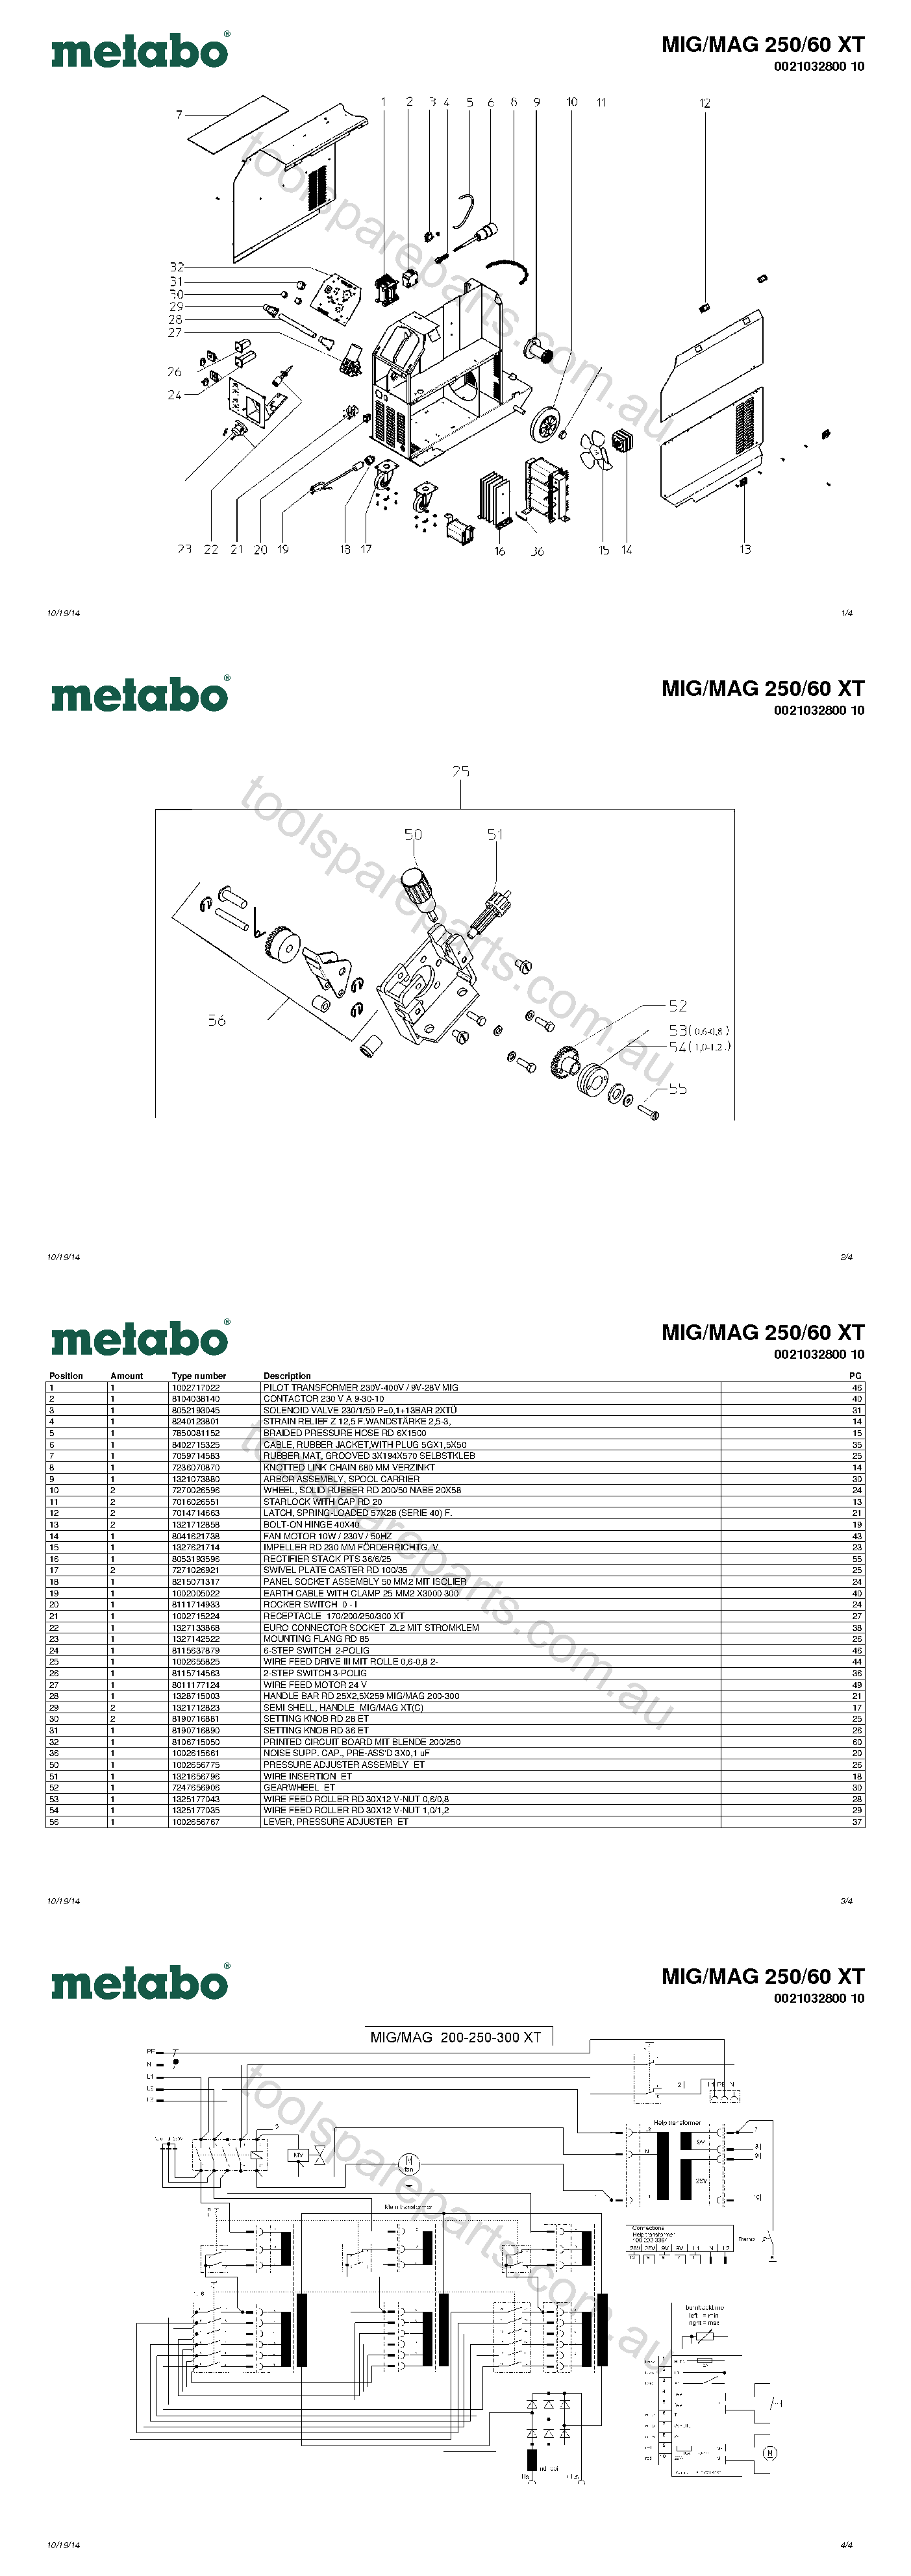 Metabo MIG/MAG 250/60 XT 0021032800 10  Diagram 1